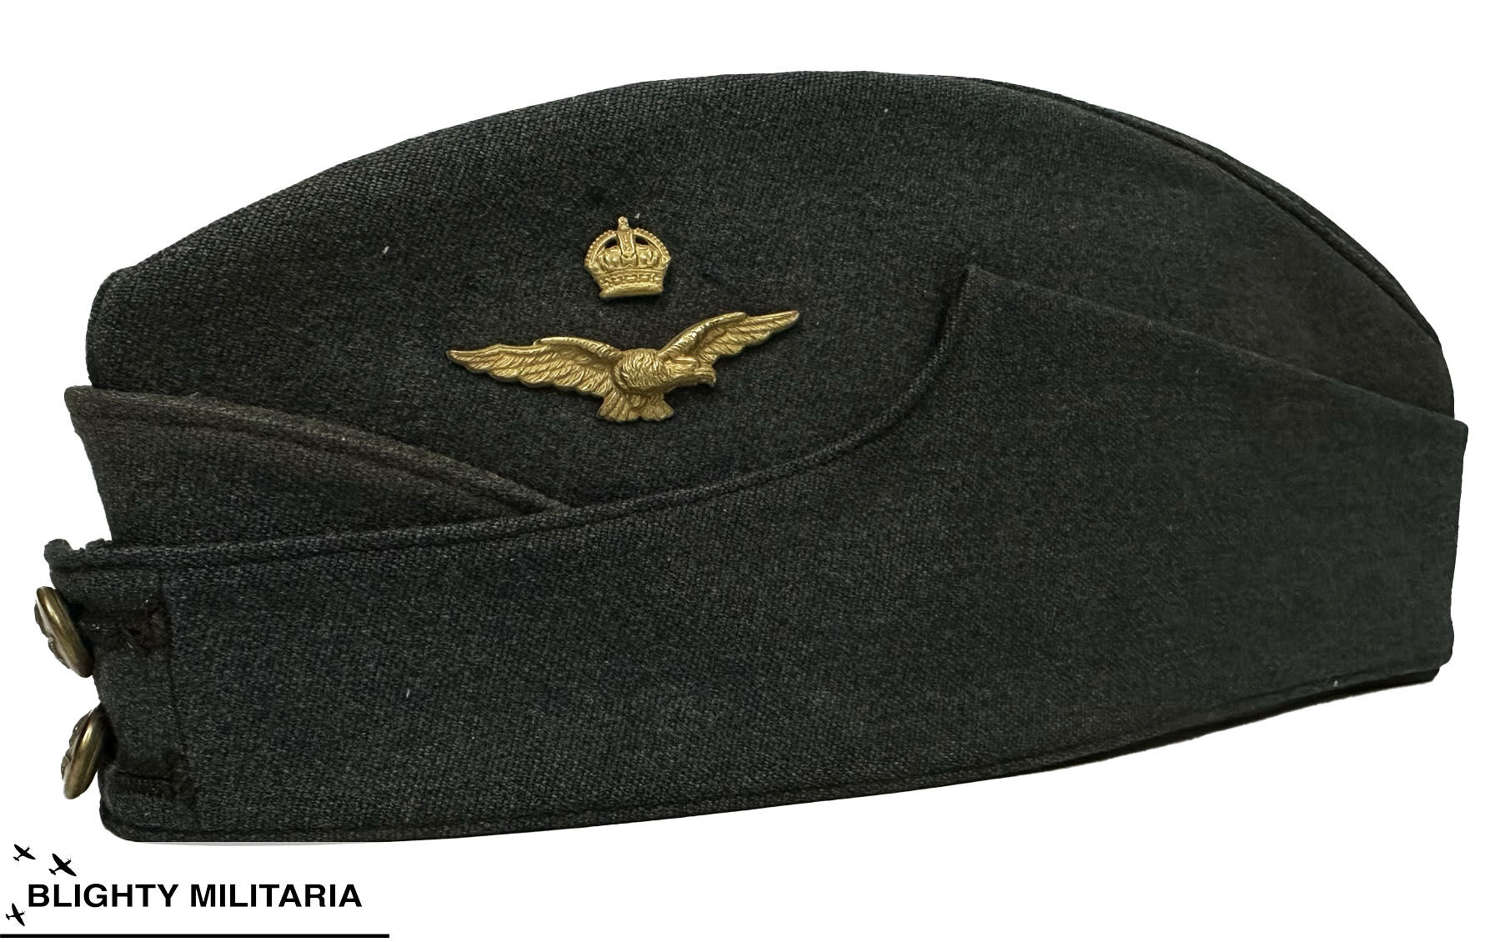 Original WW2 RAF Officer's Field Service Cap - DFC Winner + Large Size